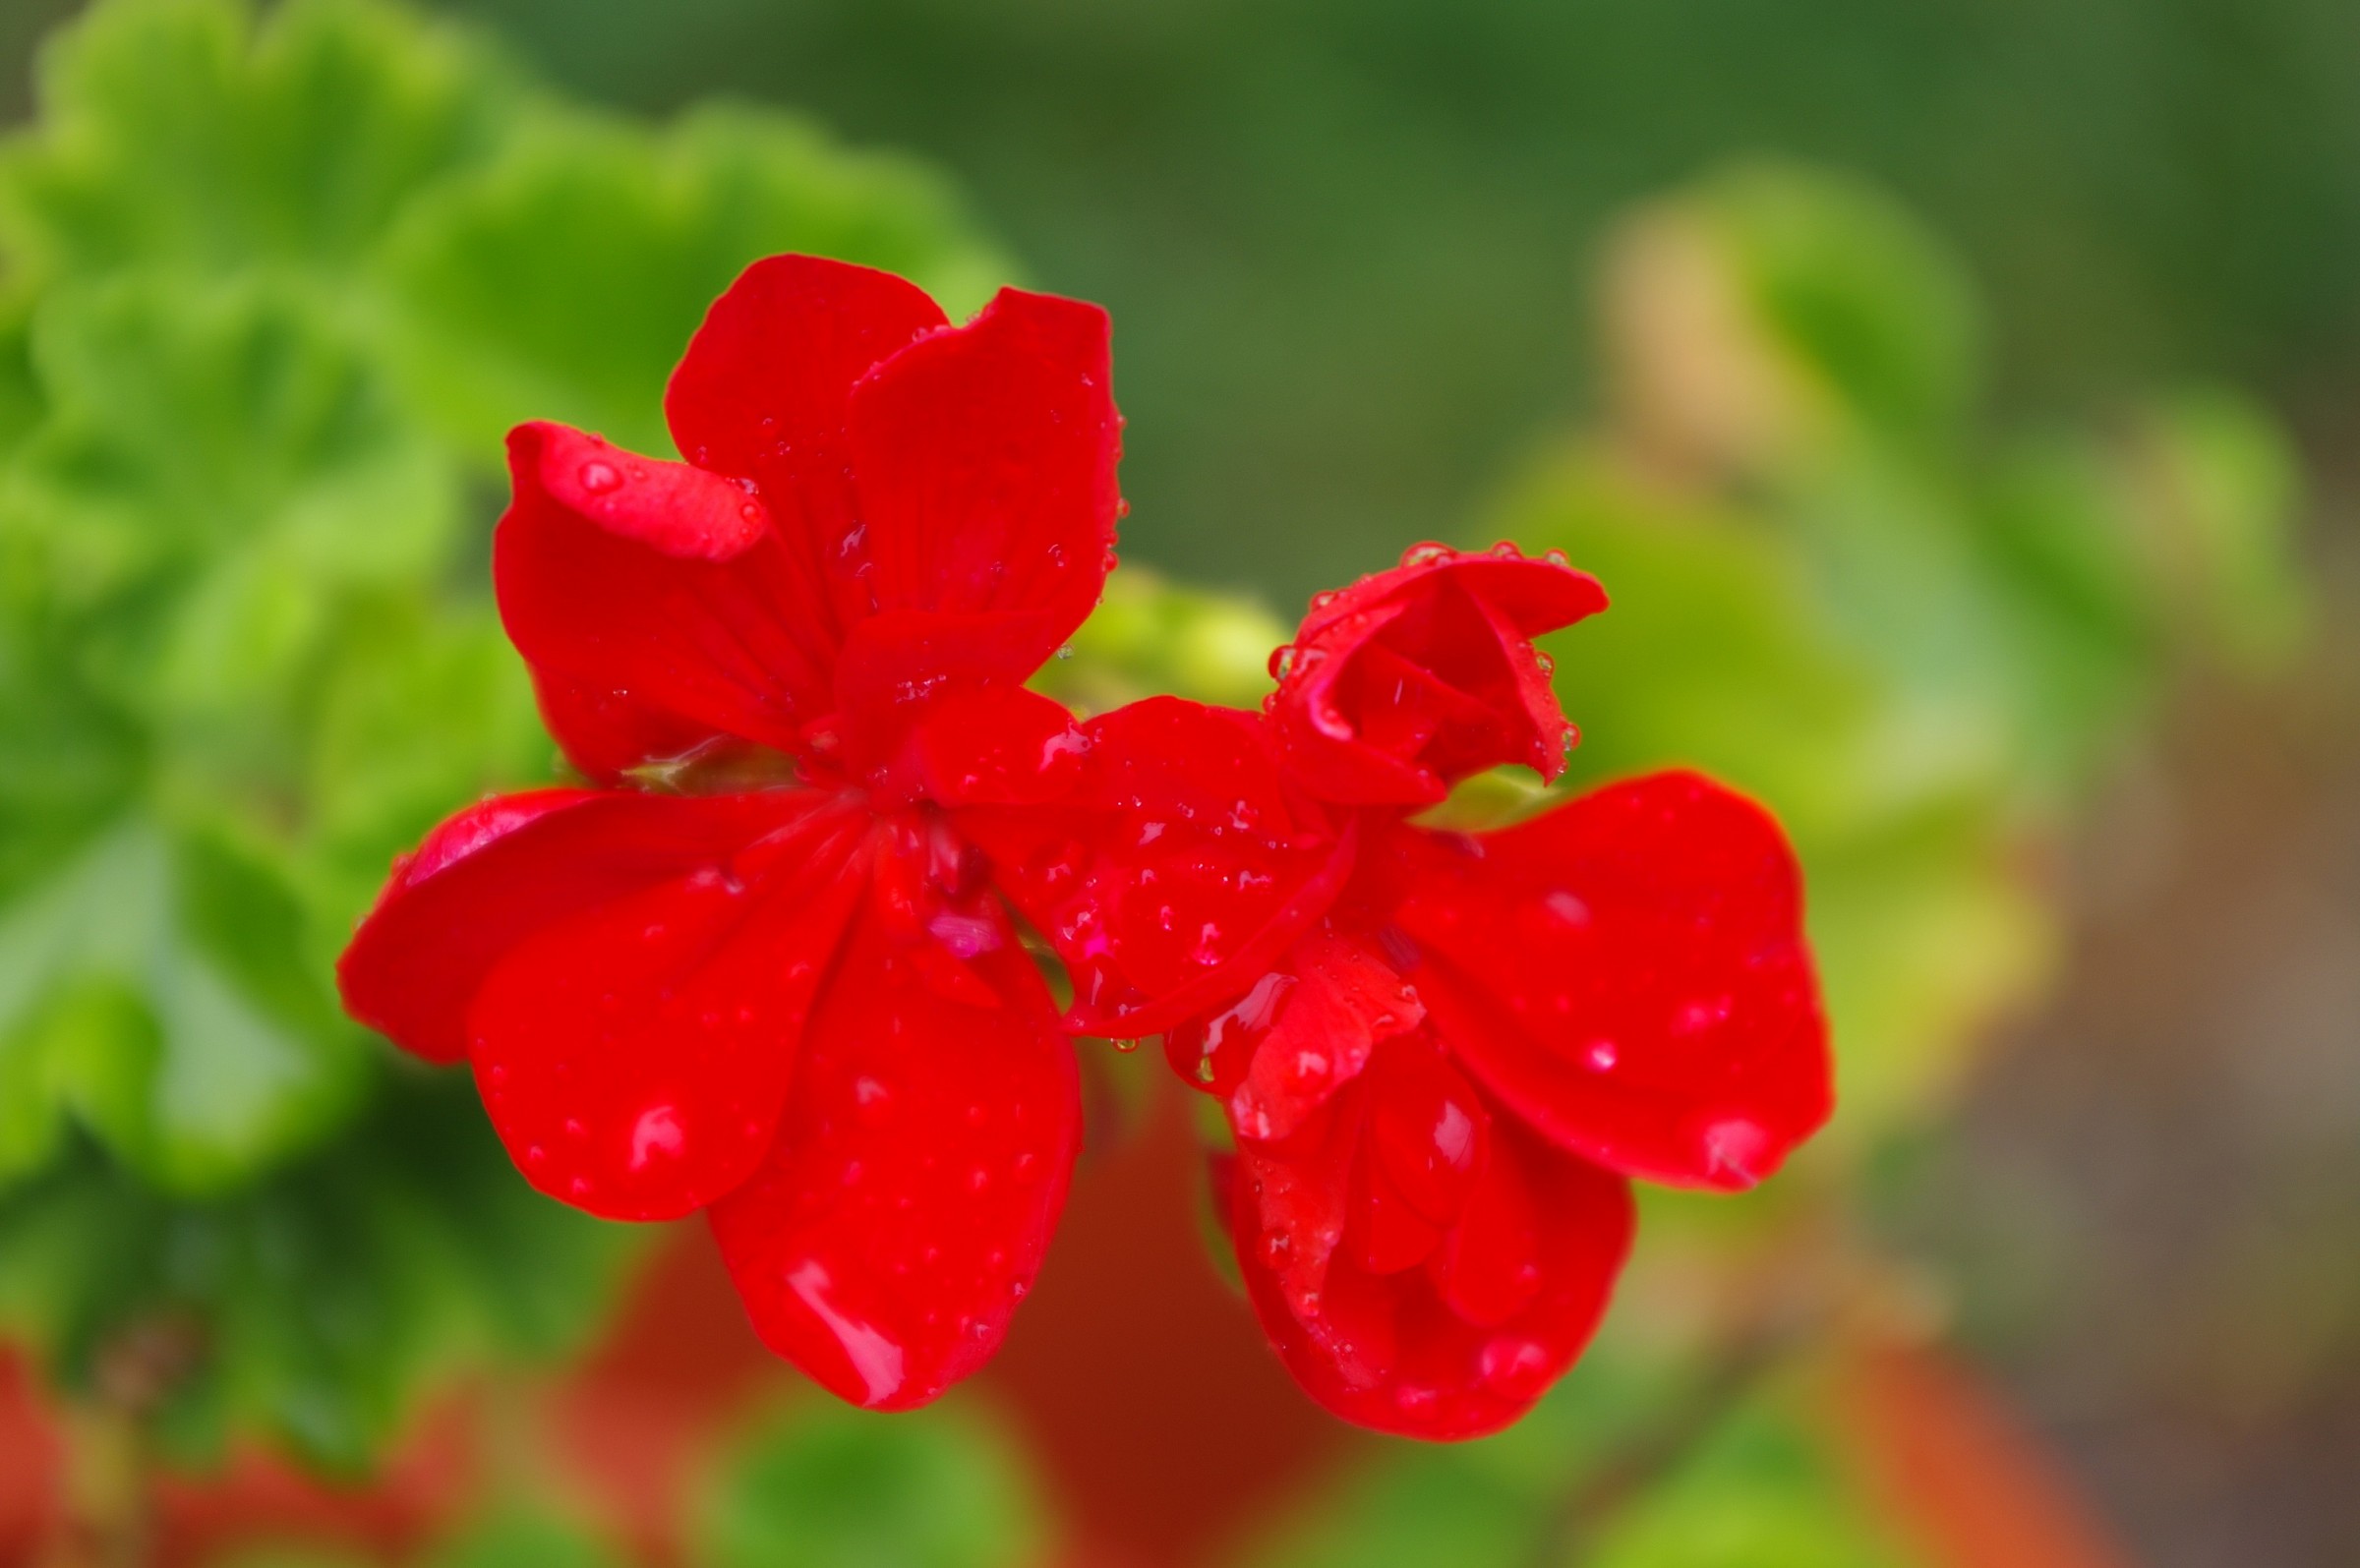 geranium after a rain...